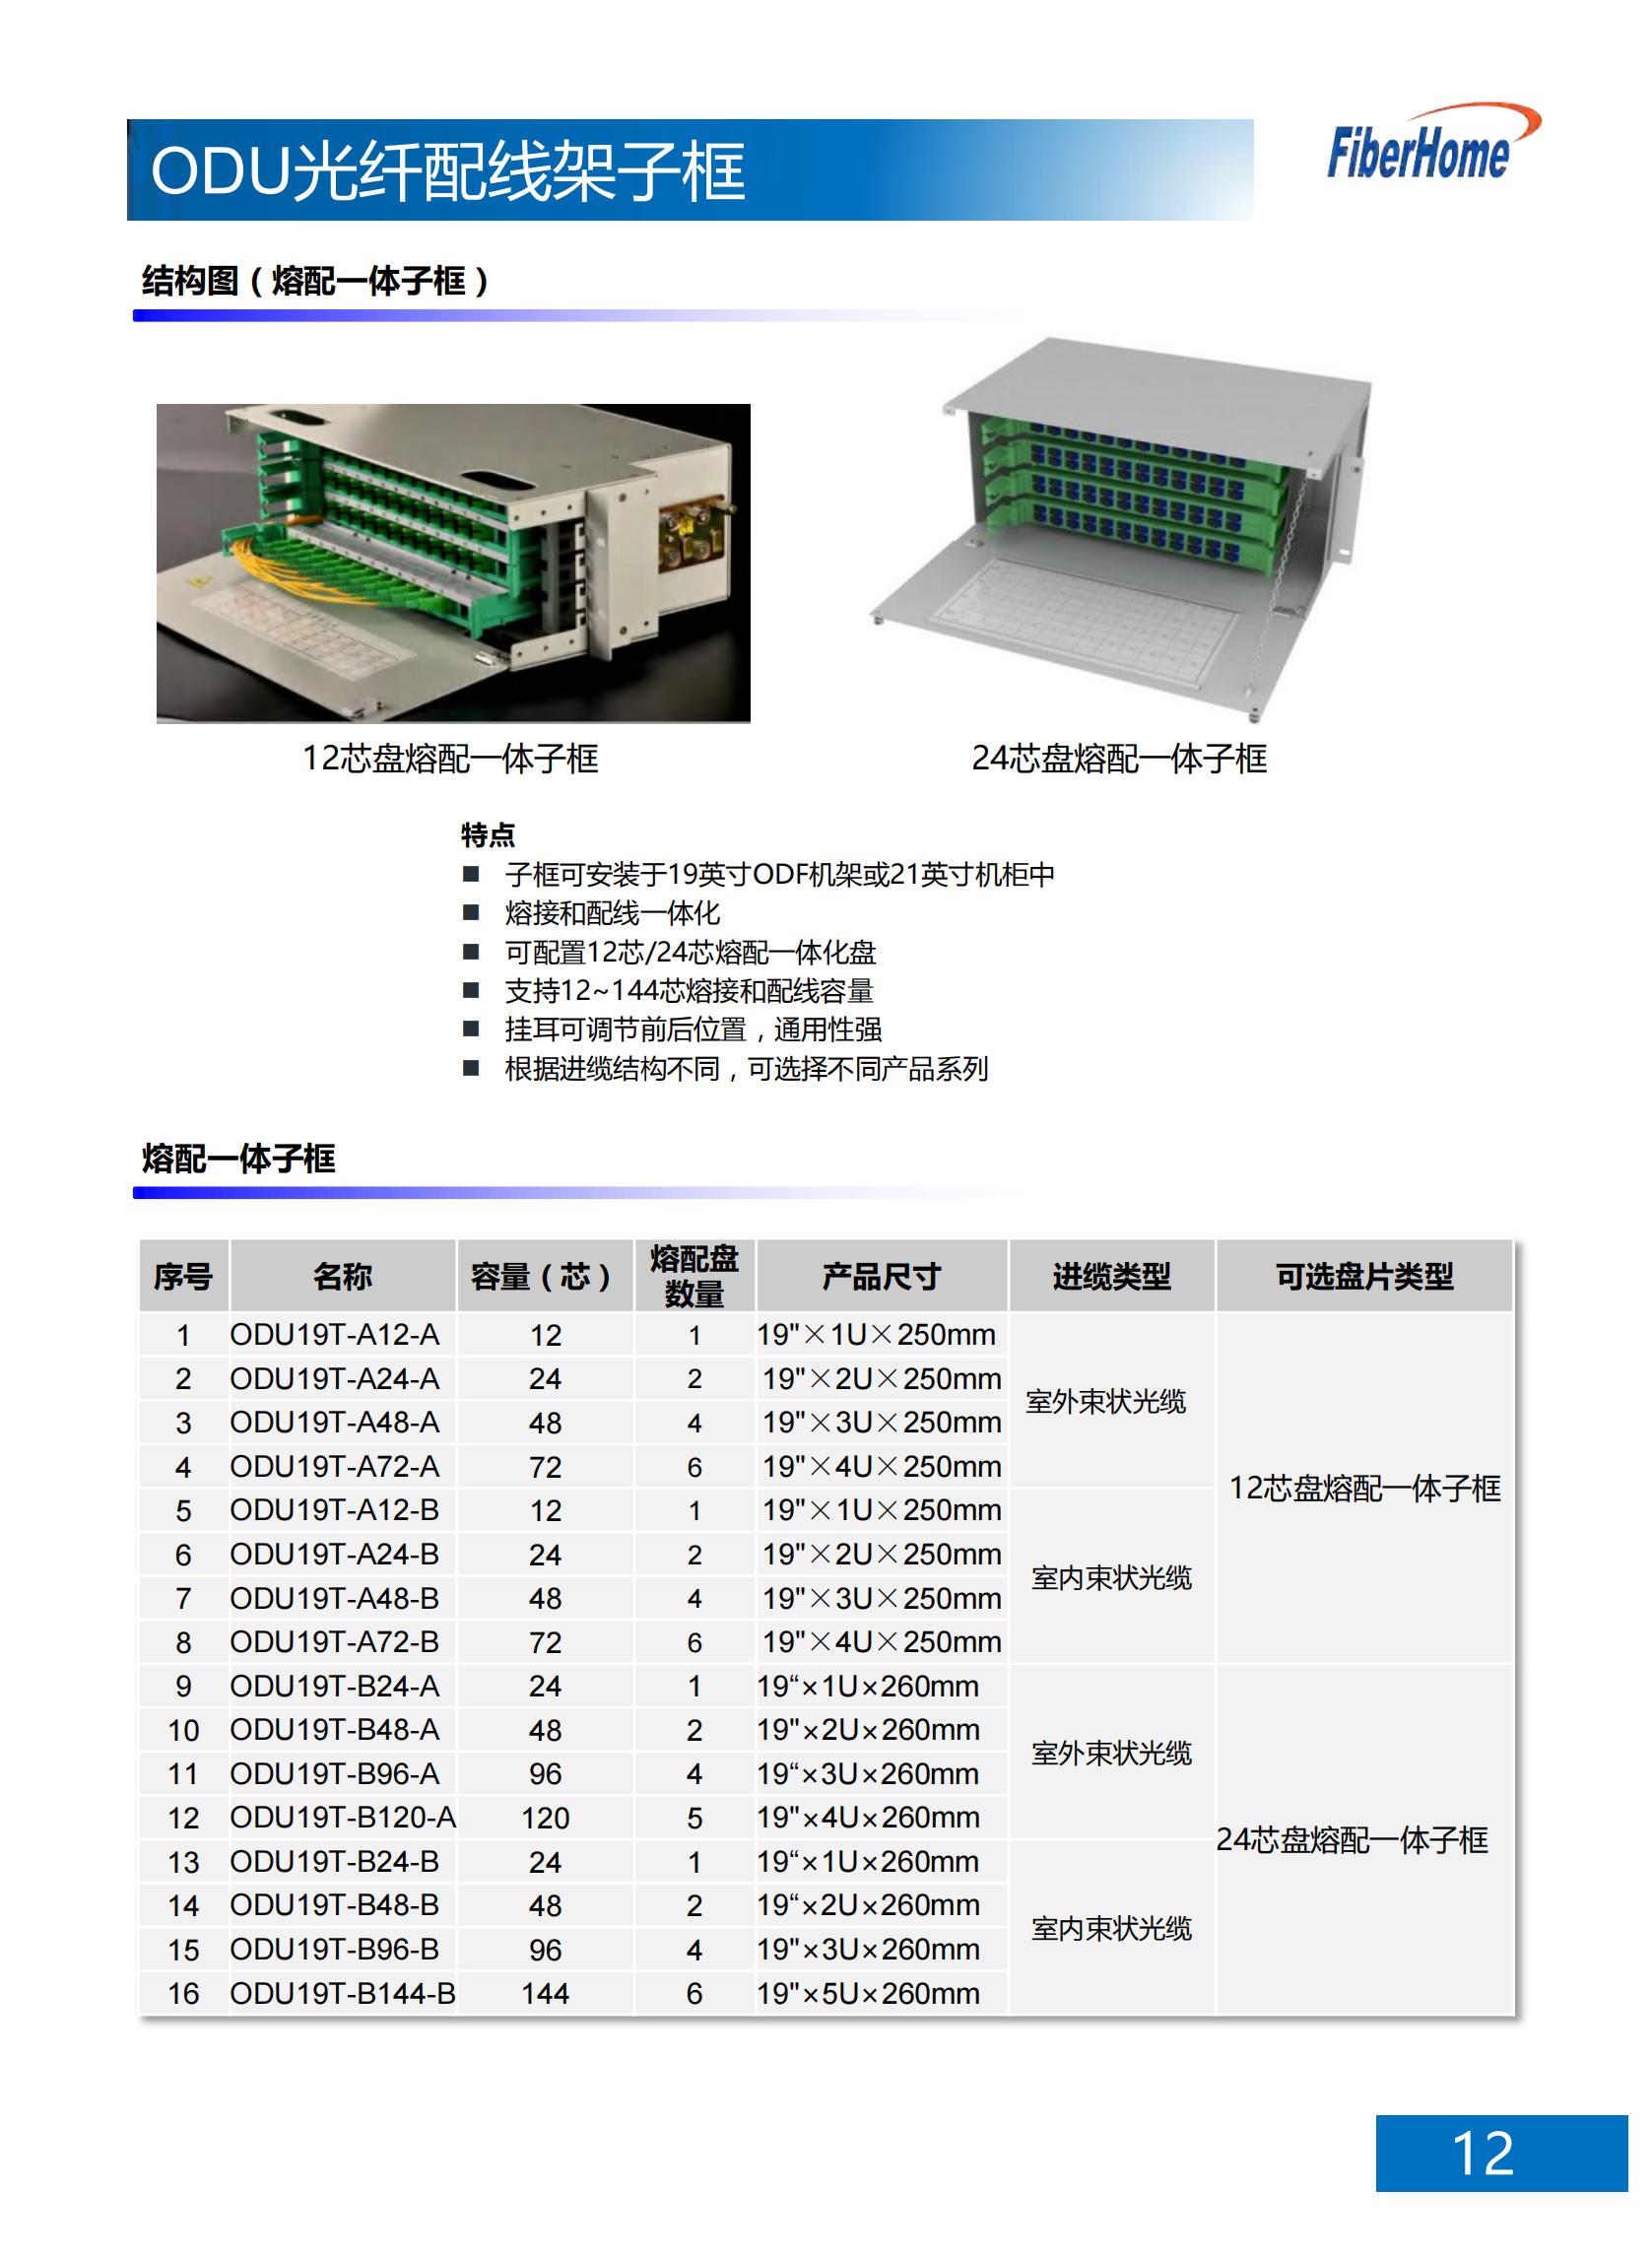 72-core ODU optical fiber distribution frame ODU19T-A1272-B-LC (including 24-core LC fusion integration unit*3)